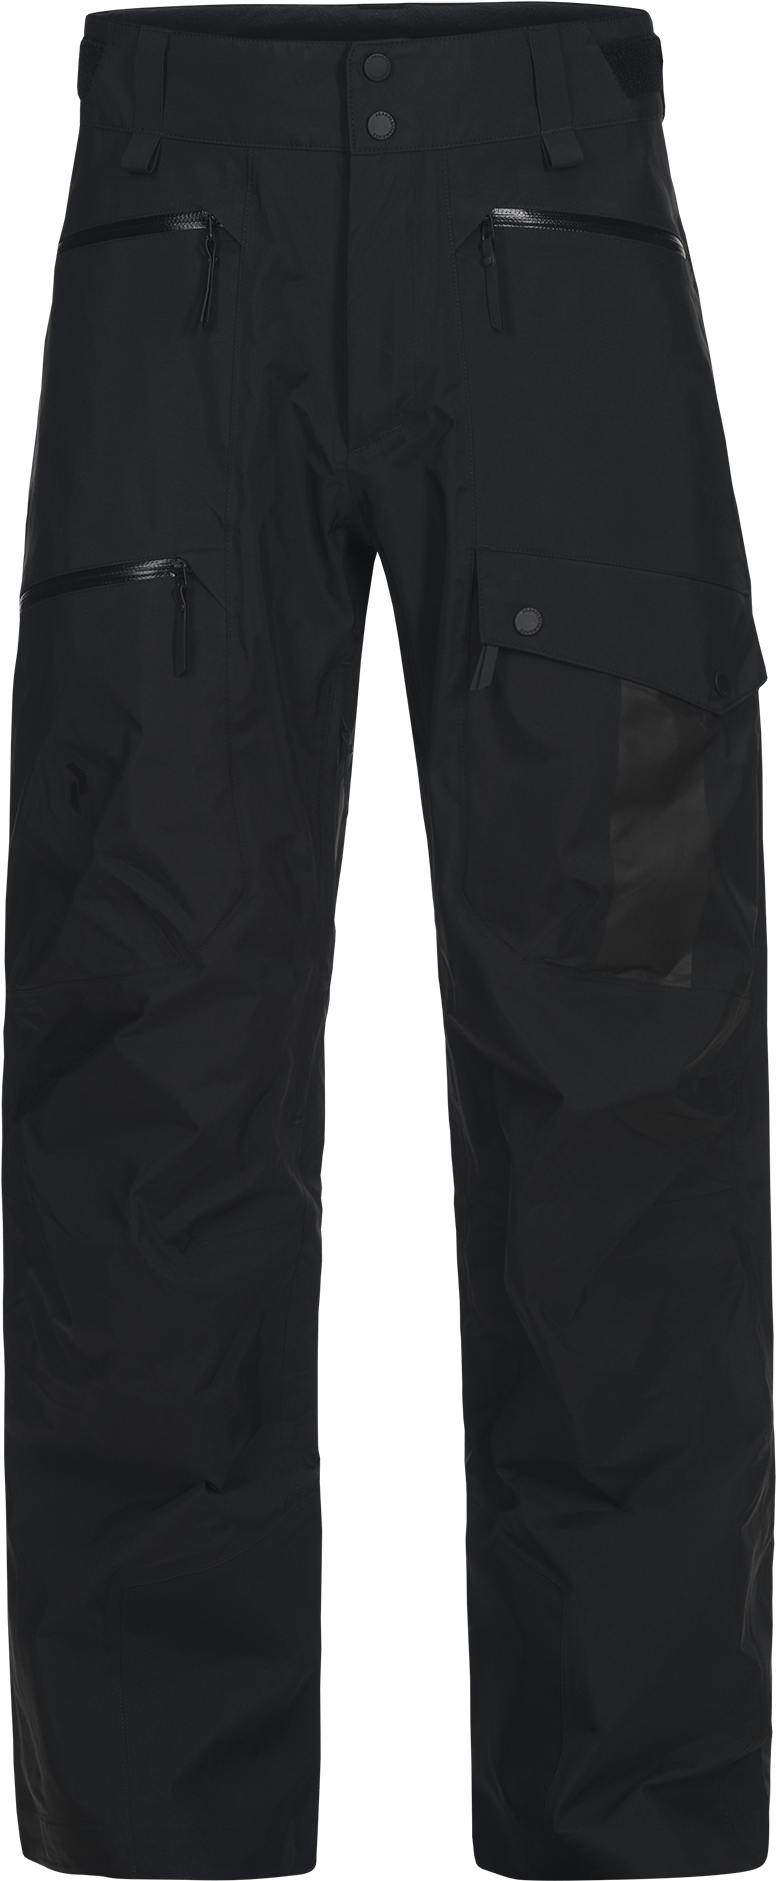 Black Tactical Cargo Pants PNG